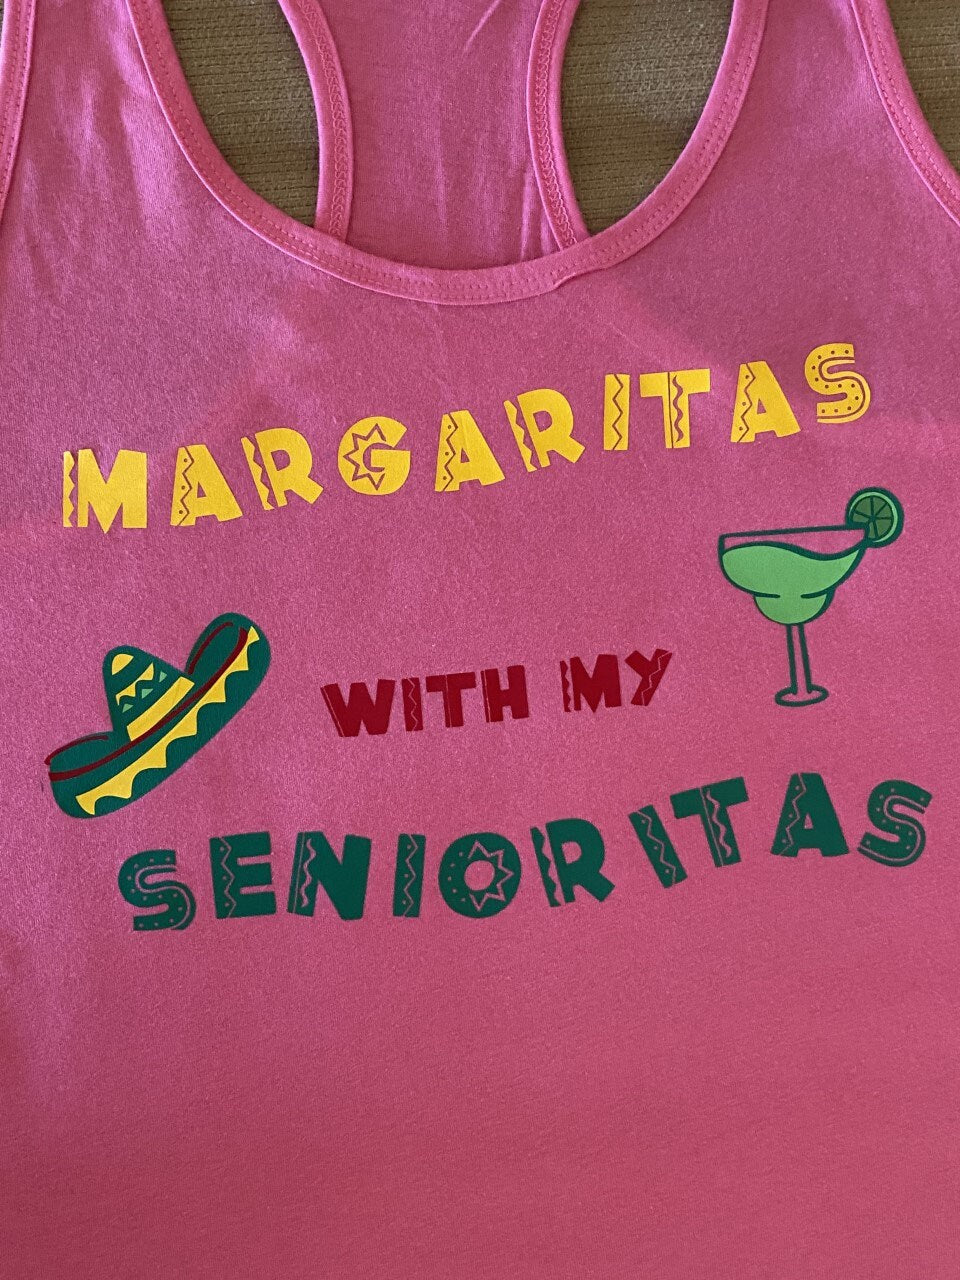 Funny shirt / adult shirt / margarita shirt / tequila shirt / tank top / t shirt / funny day drinking shirt / funny alcohol gift best friend